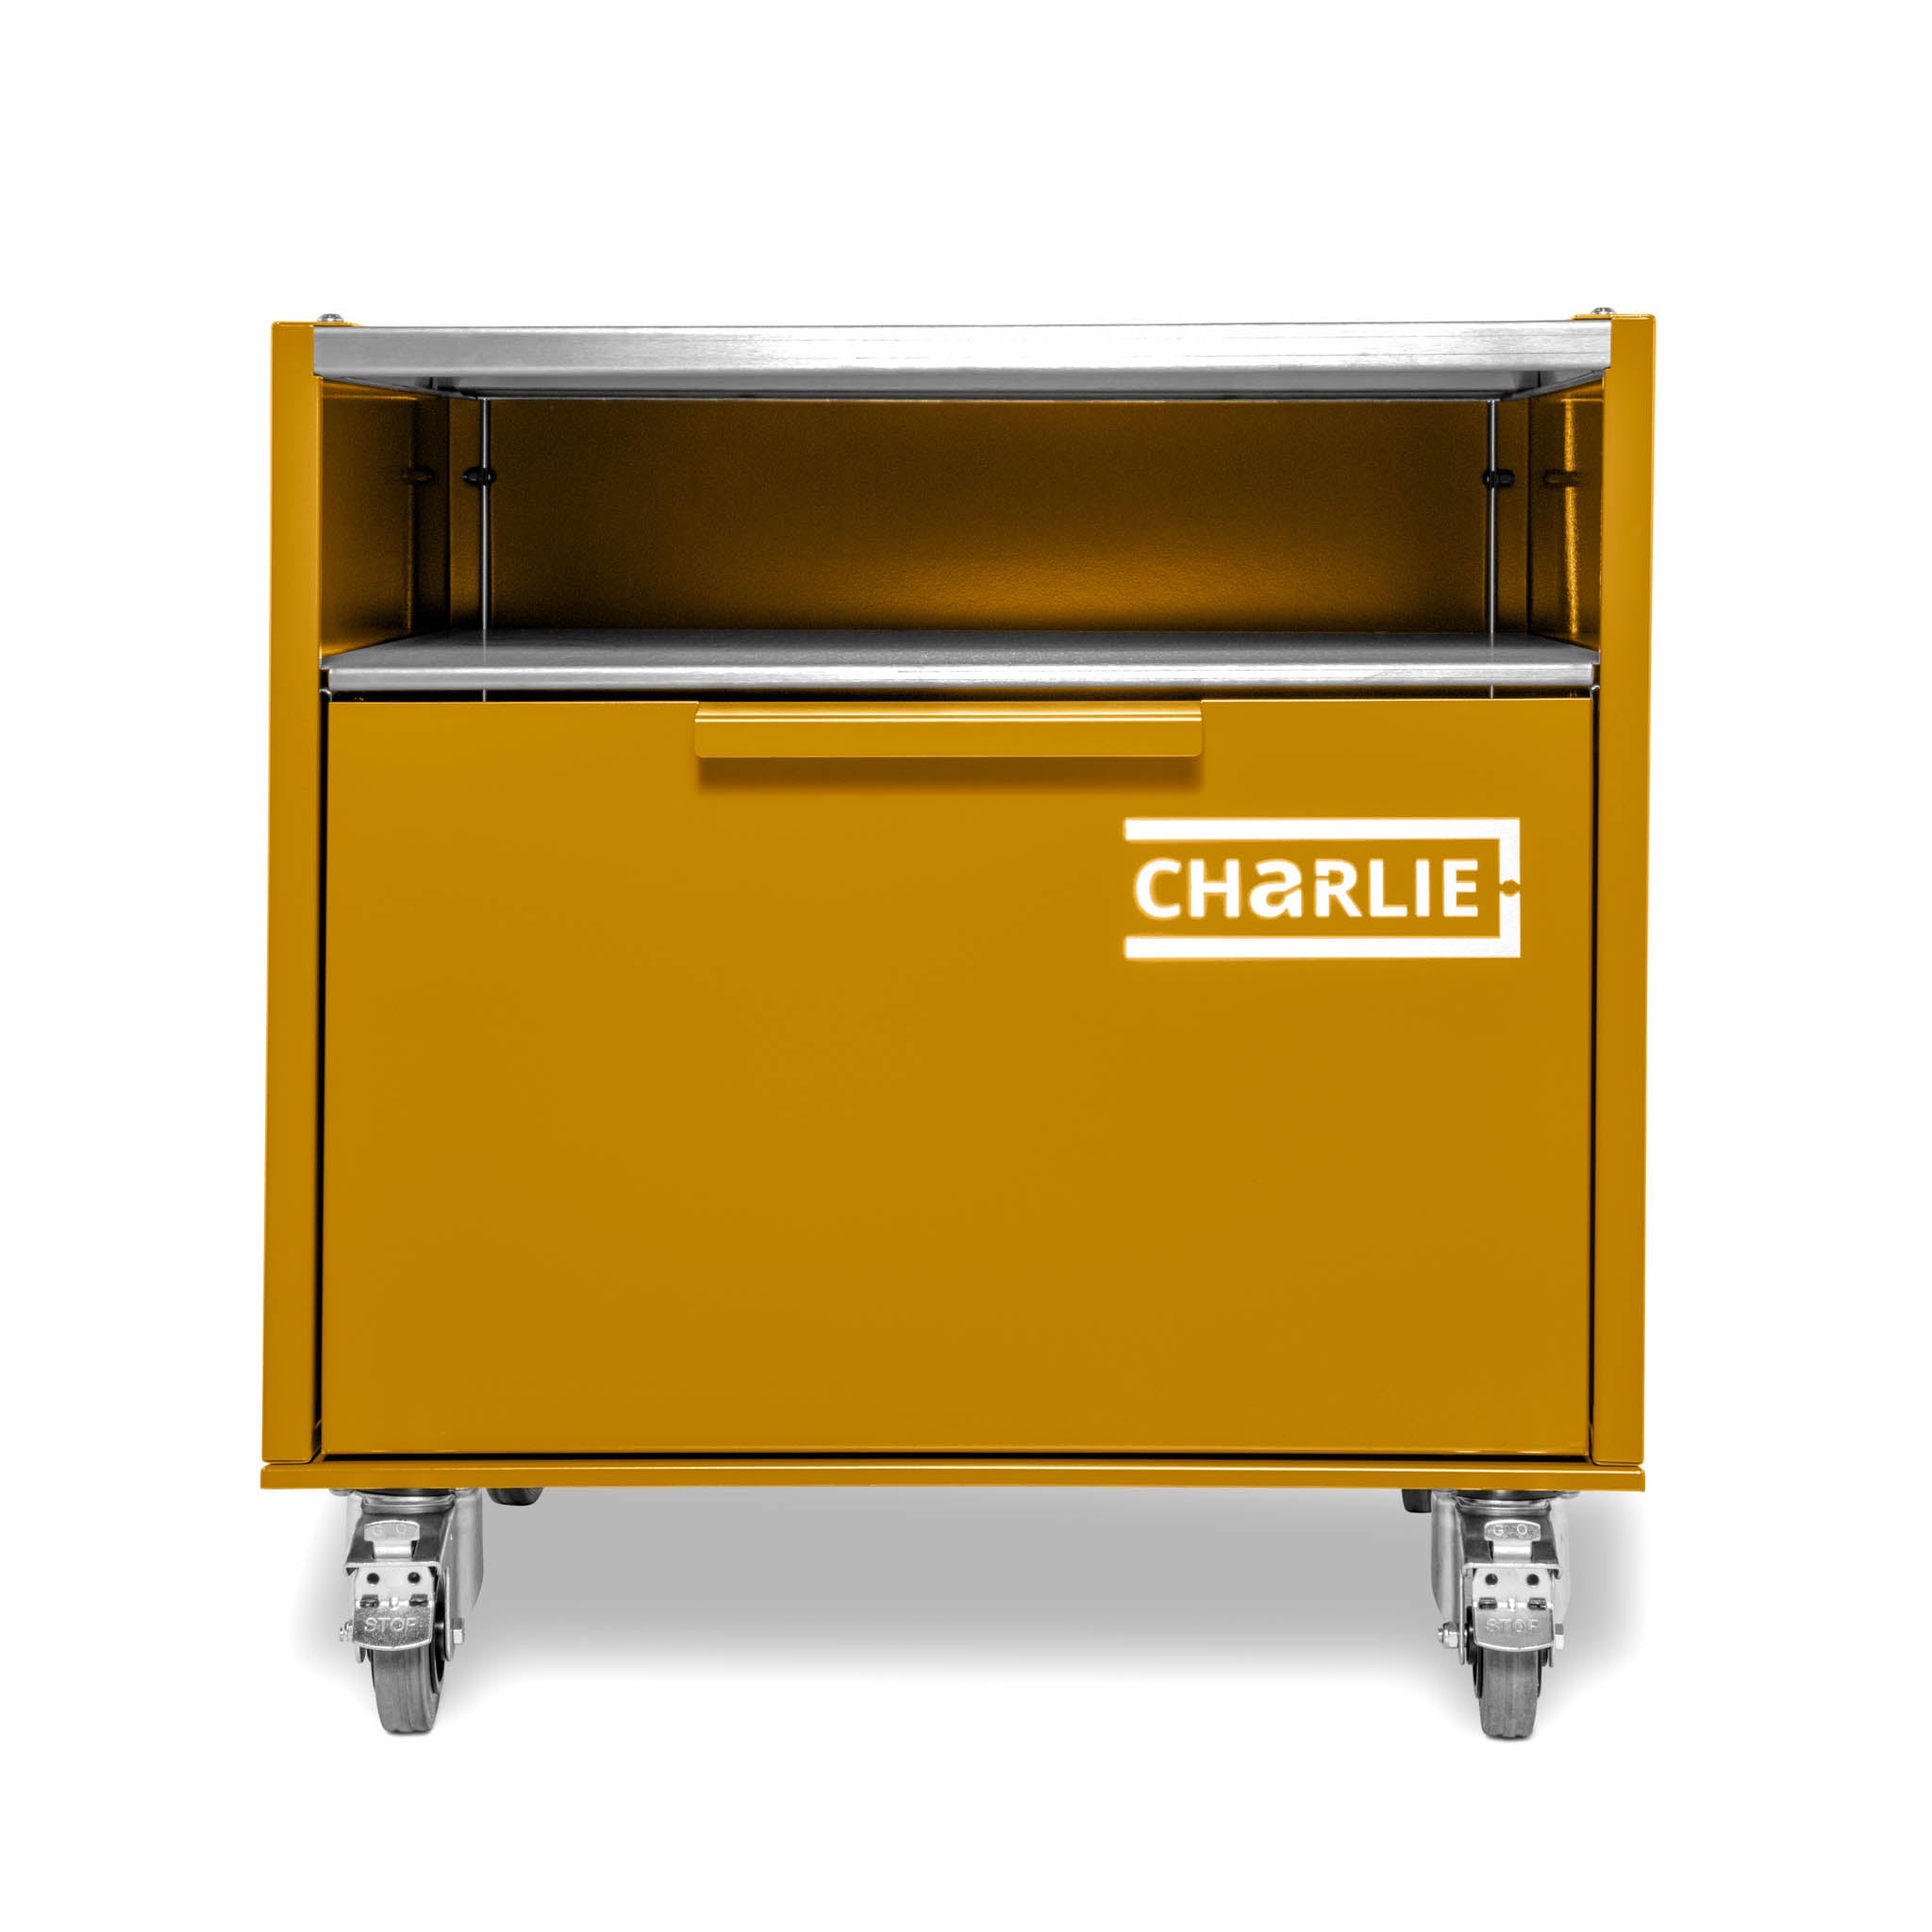 Charlie Base Cabinet - Honeycomb - Charlie Oven